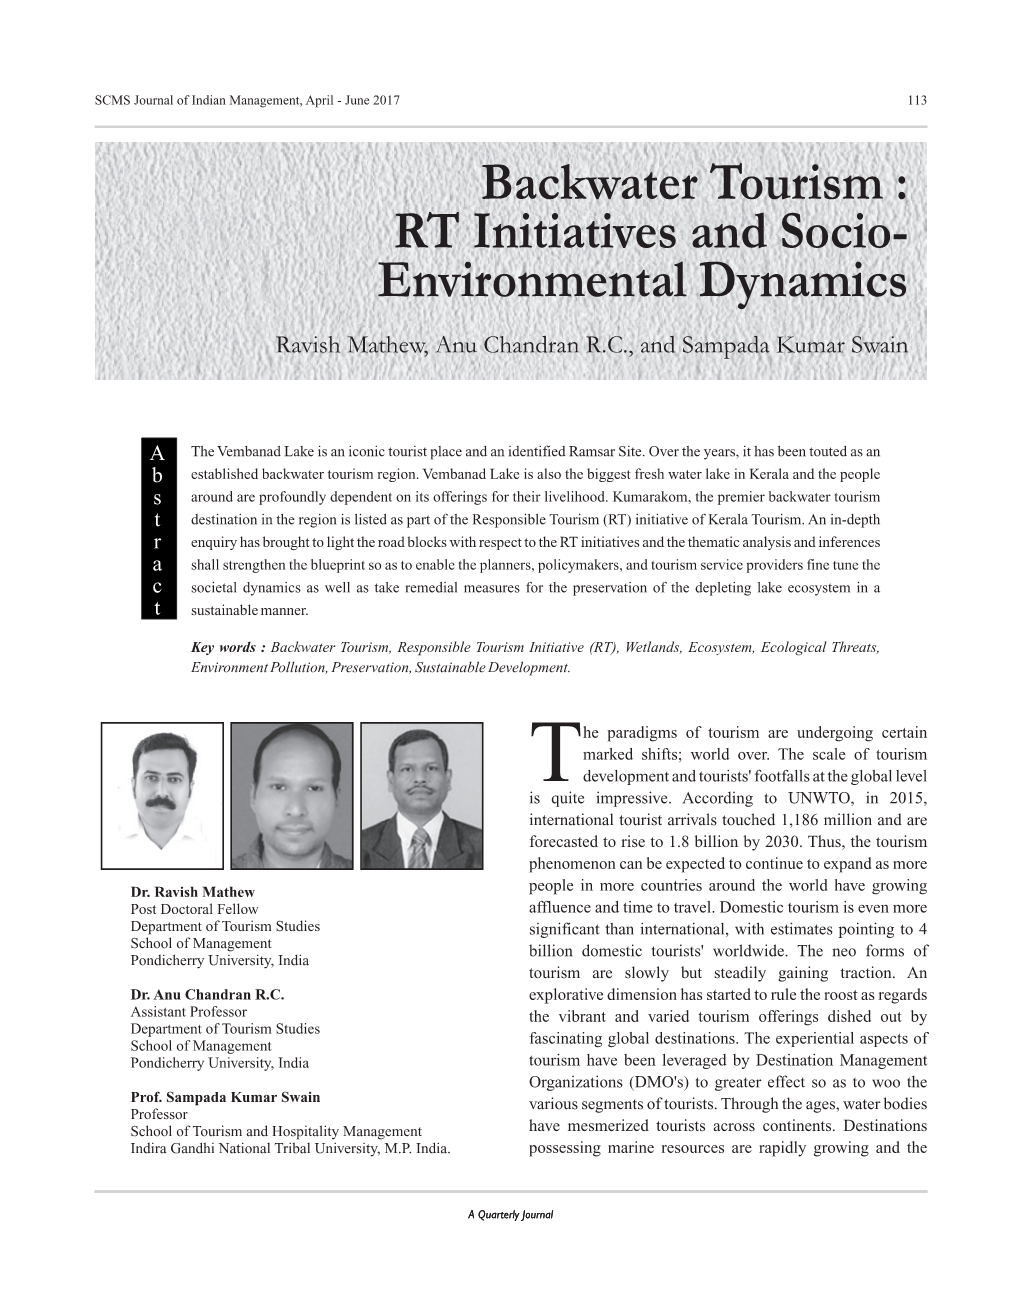 Backwater Tourism : RT Initiatives and Socio- Environmental Dynamics Ravish Mathew, Anu Chandran R.C., and Sampada Kumar Swain